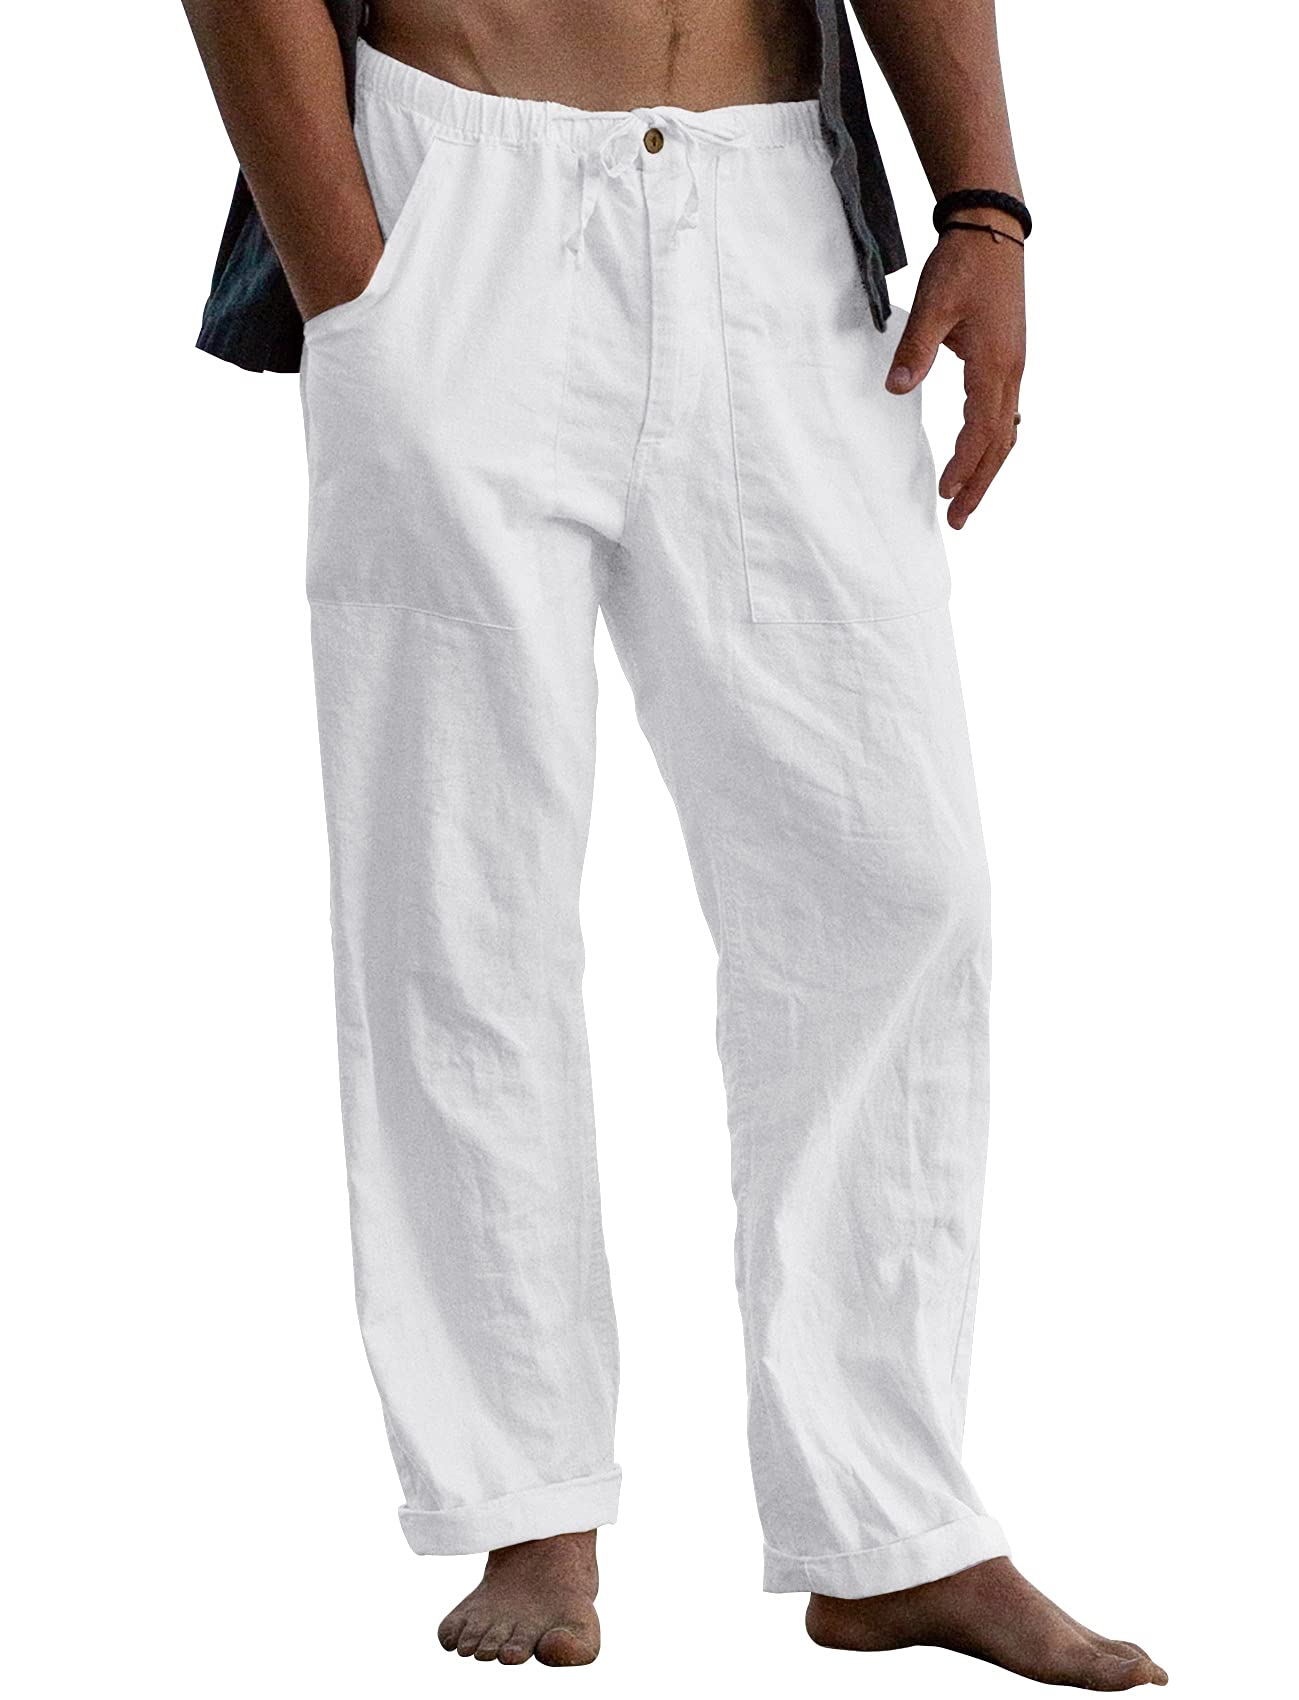 Buy dockers Men's Comfort Khaki Upgrade Relaxed Fit Pleat Pant, British  Khaki, 30x32 at Amazon.in